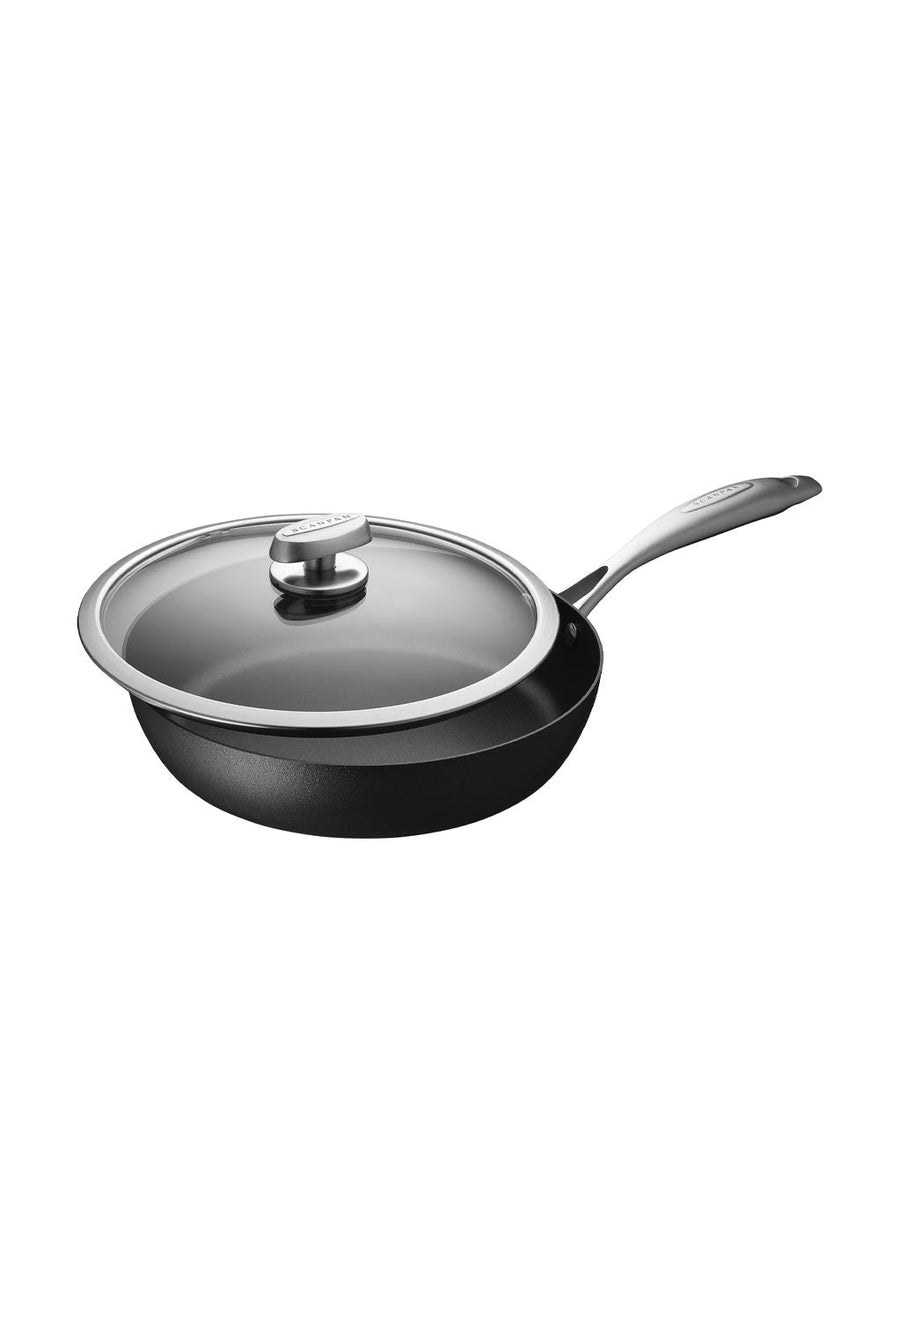 Scanpan Pro IQ Saute Pan with lid